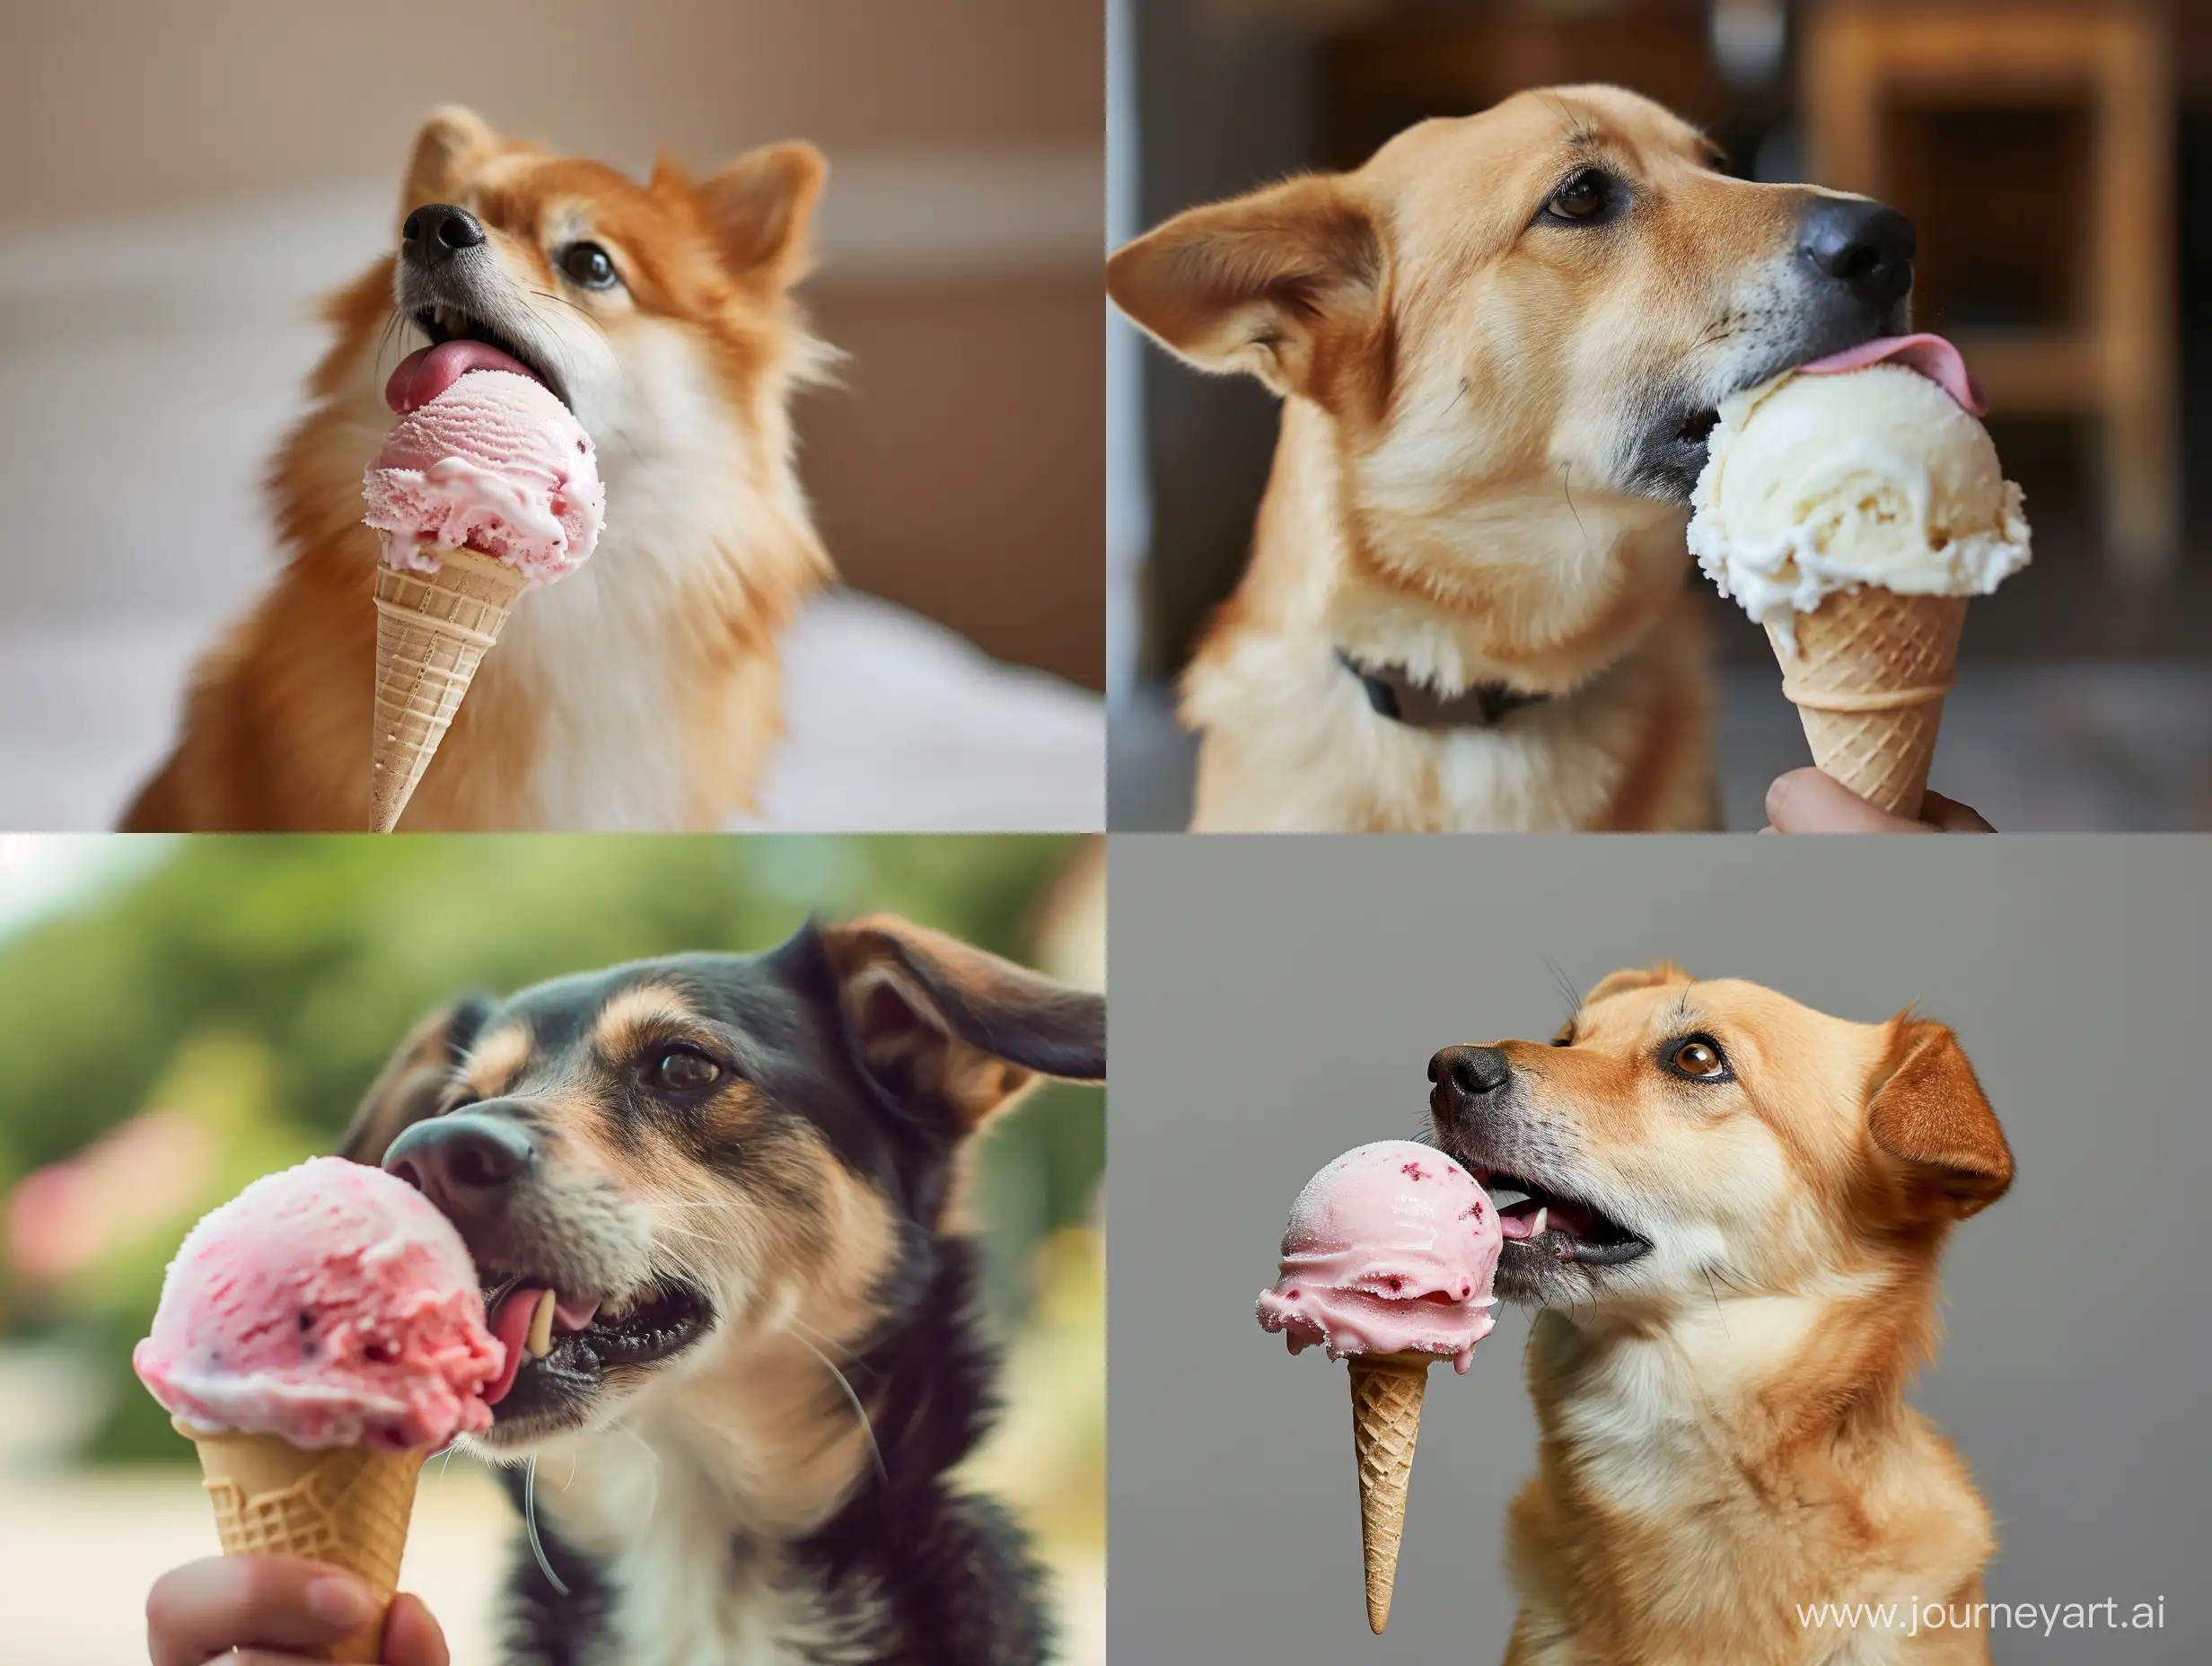 Playful-Dog-Enjoying-Ice-Cream-in-a-Summer-Setting